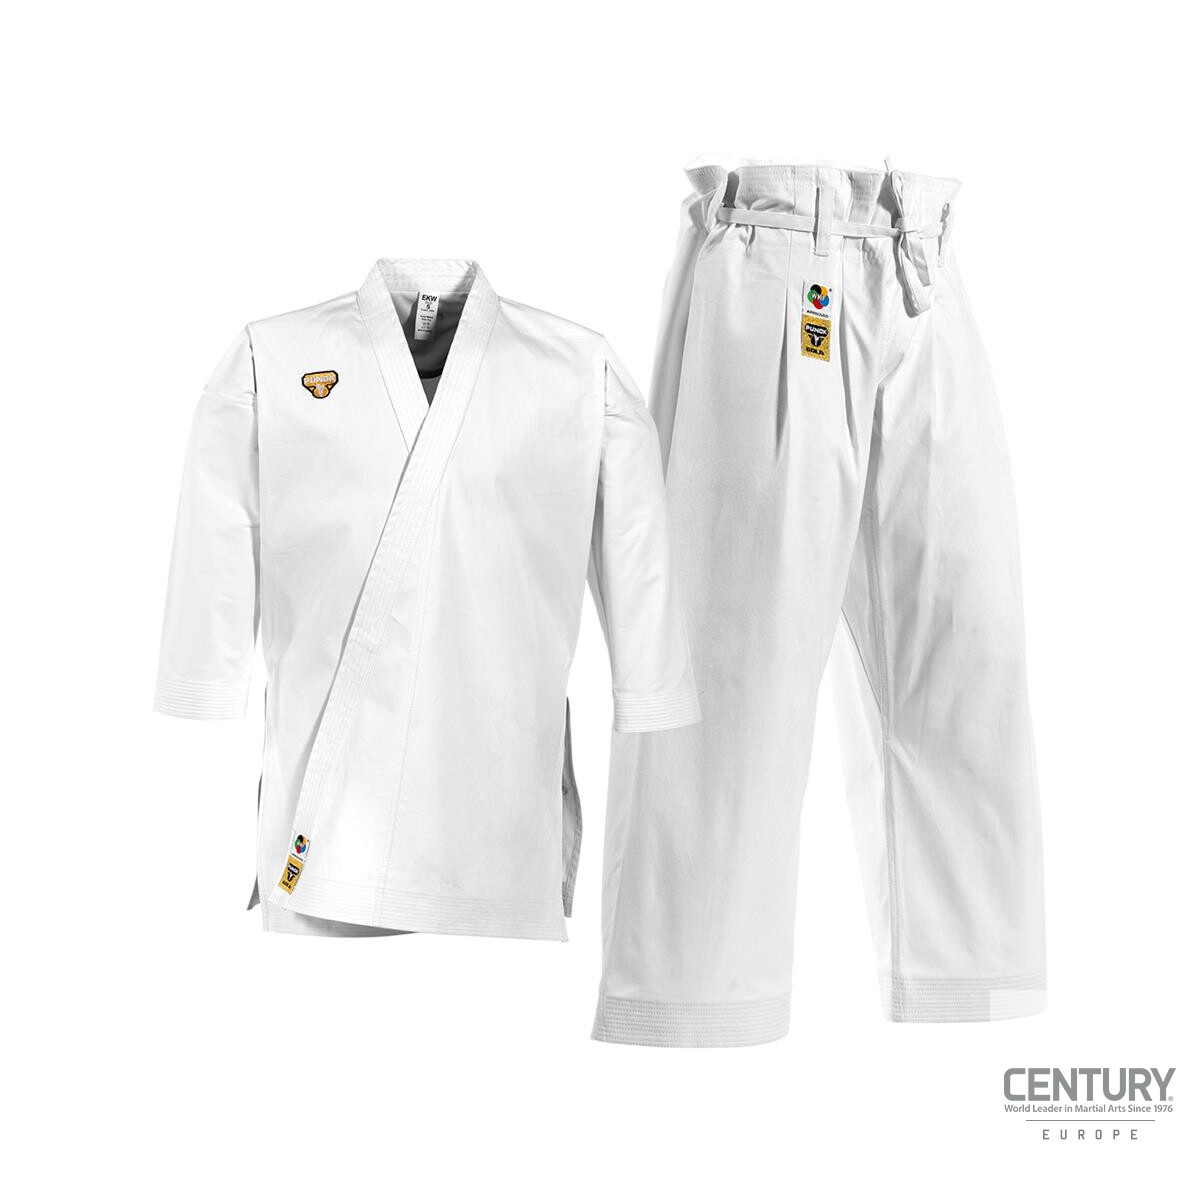 Century Karate Gi Size Chart